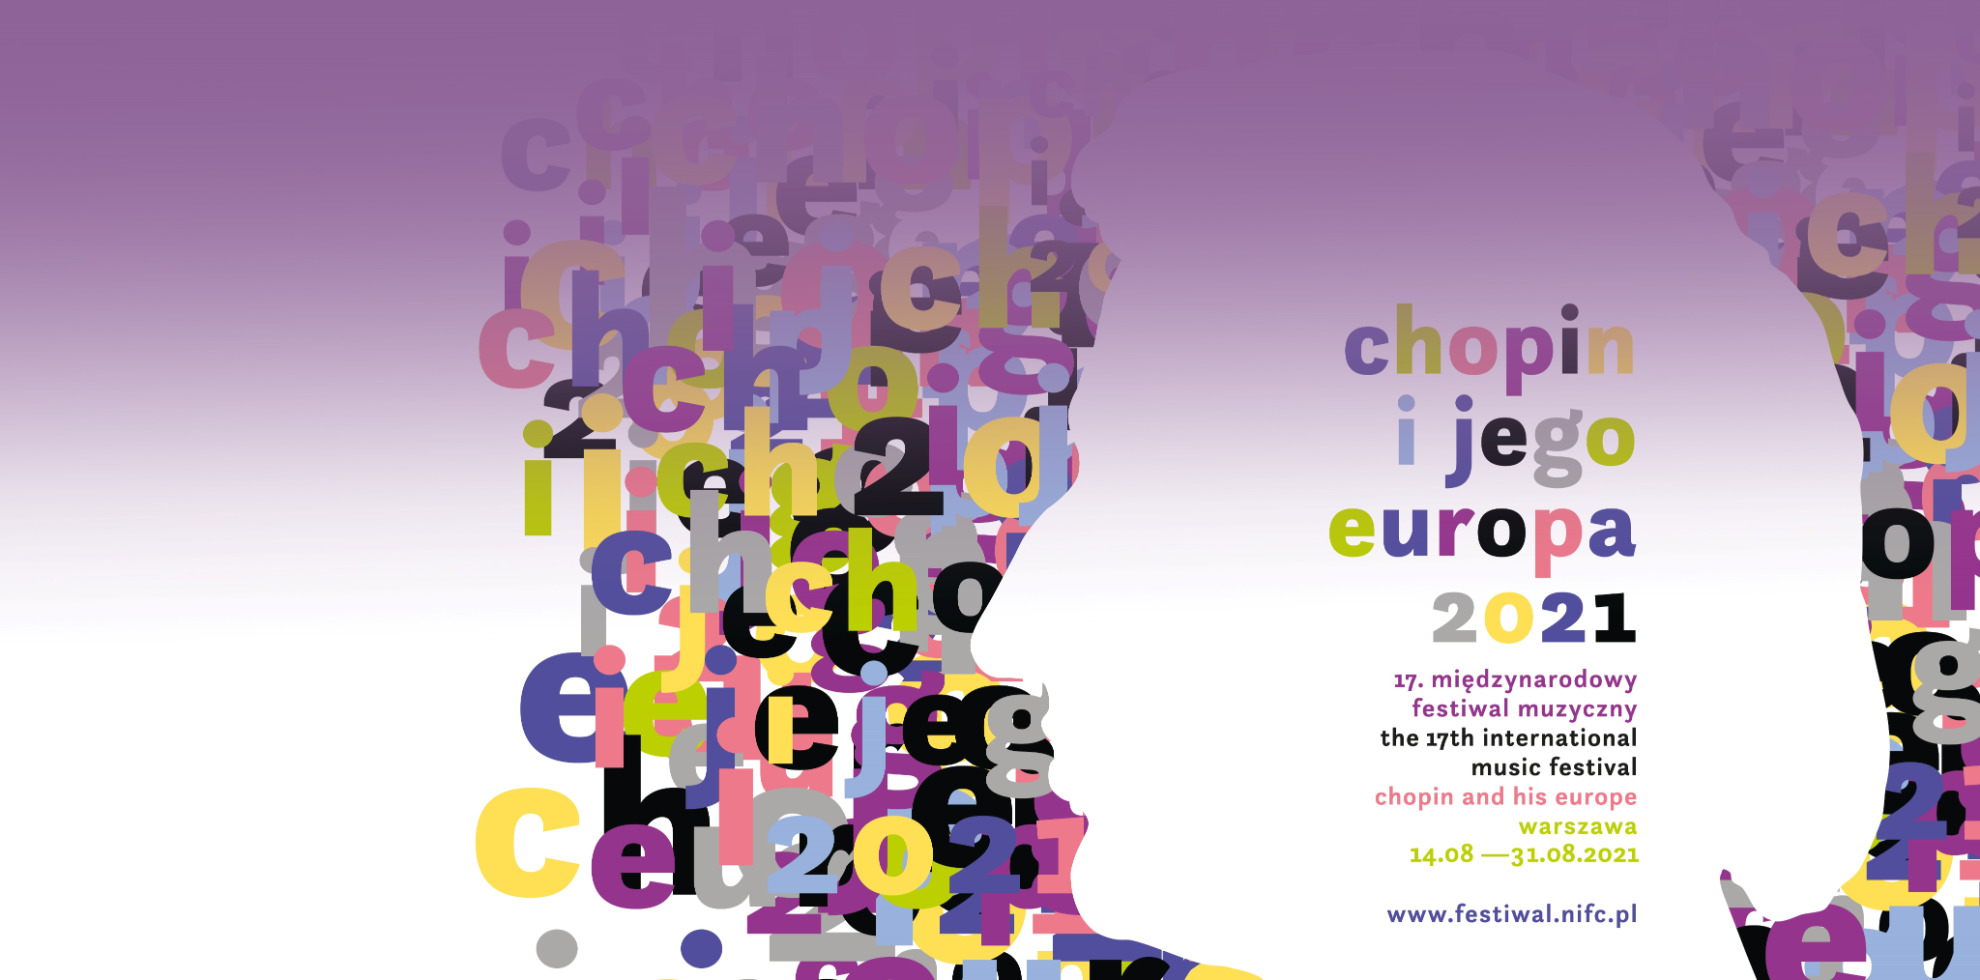 Festiwal Chopin i jego europa